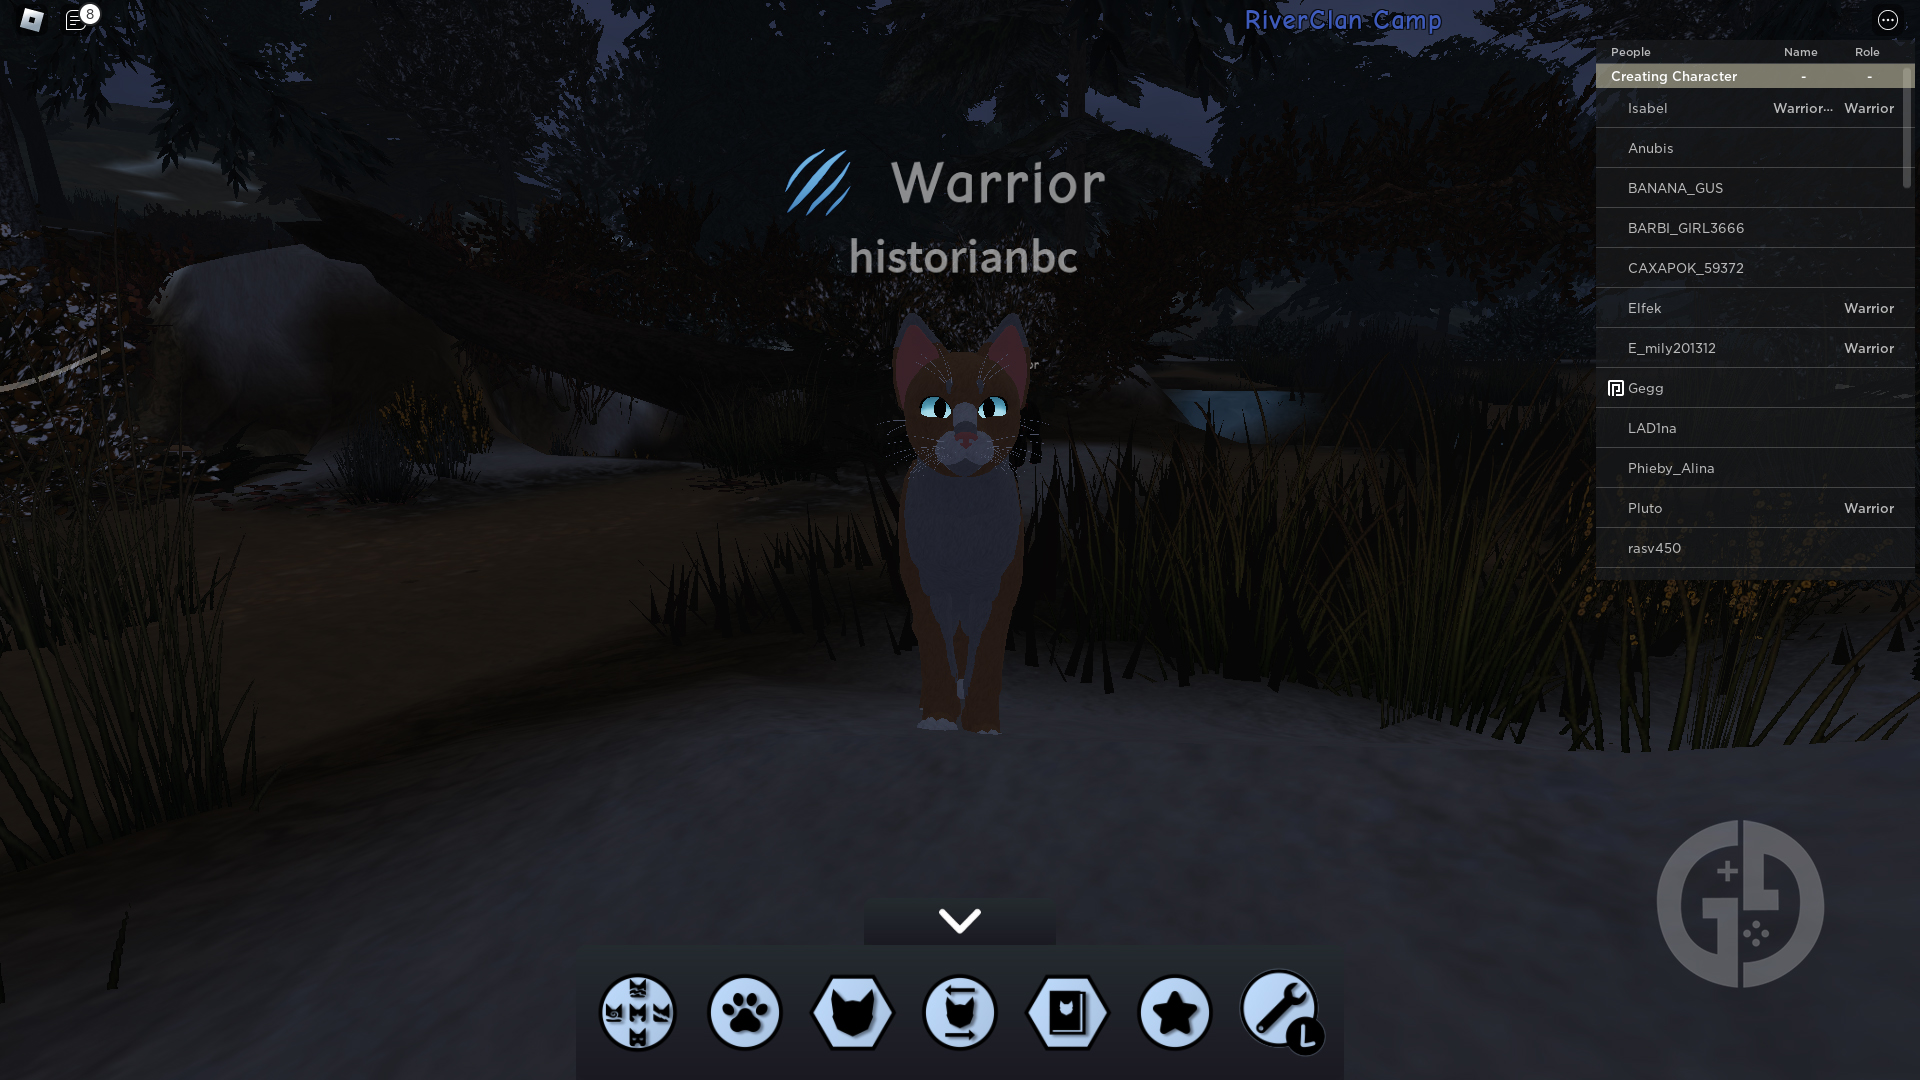 2023 * Warrior Cats Codes 2023 - Roblox Warrior Cats Codes 2023 - Today New Warrior  Cats Codes 2023 